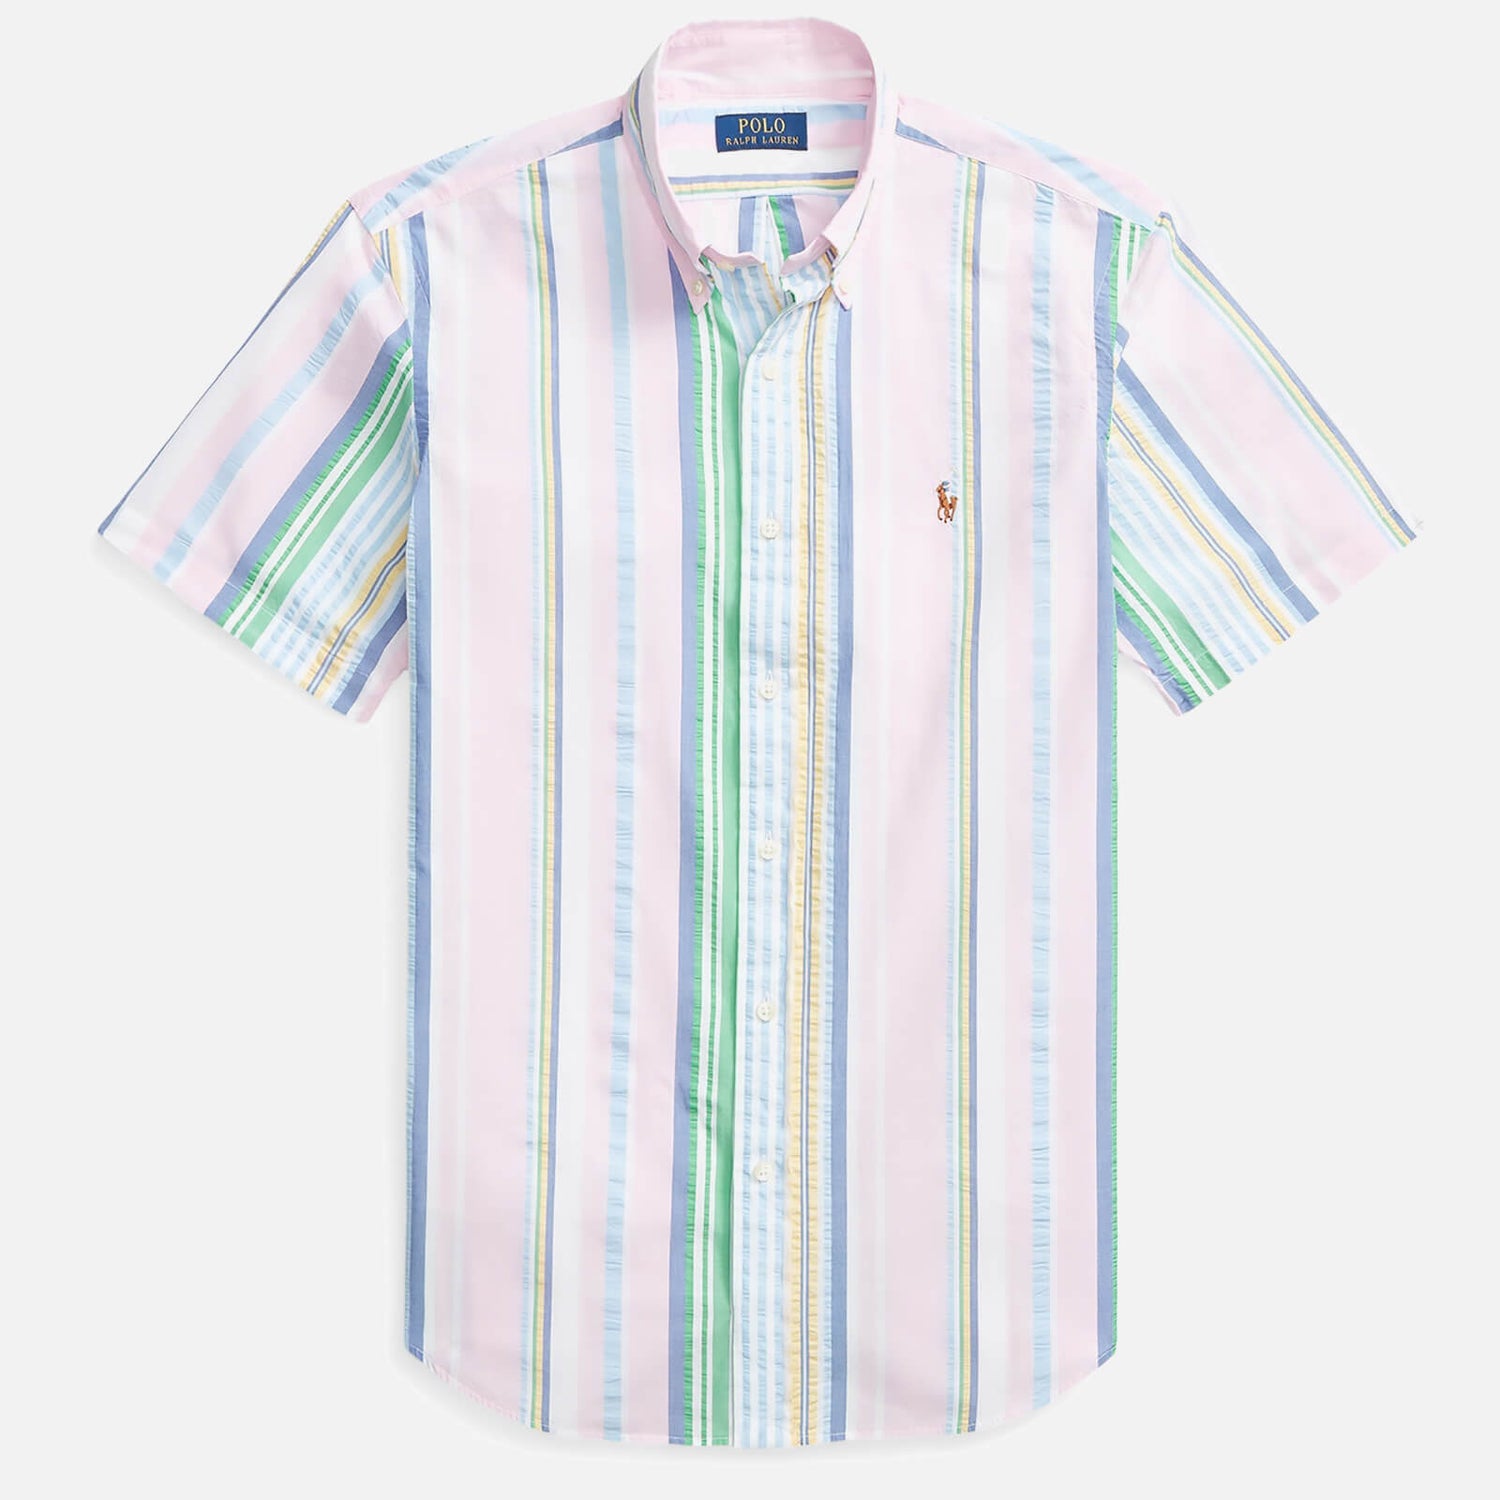 Polo Ralph Lauren Men's Seersucker Short Sleeve Shirt - Pink/Blue Multi